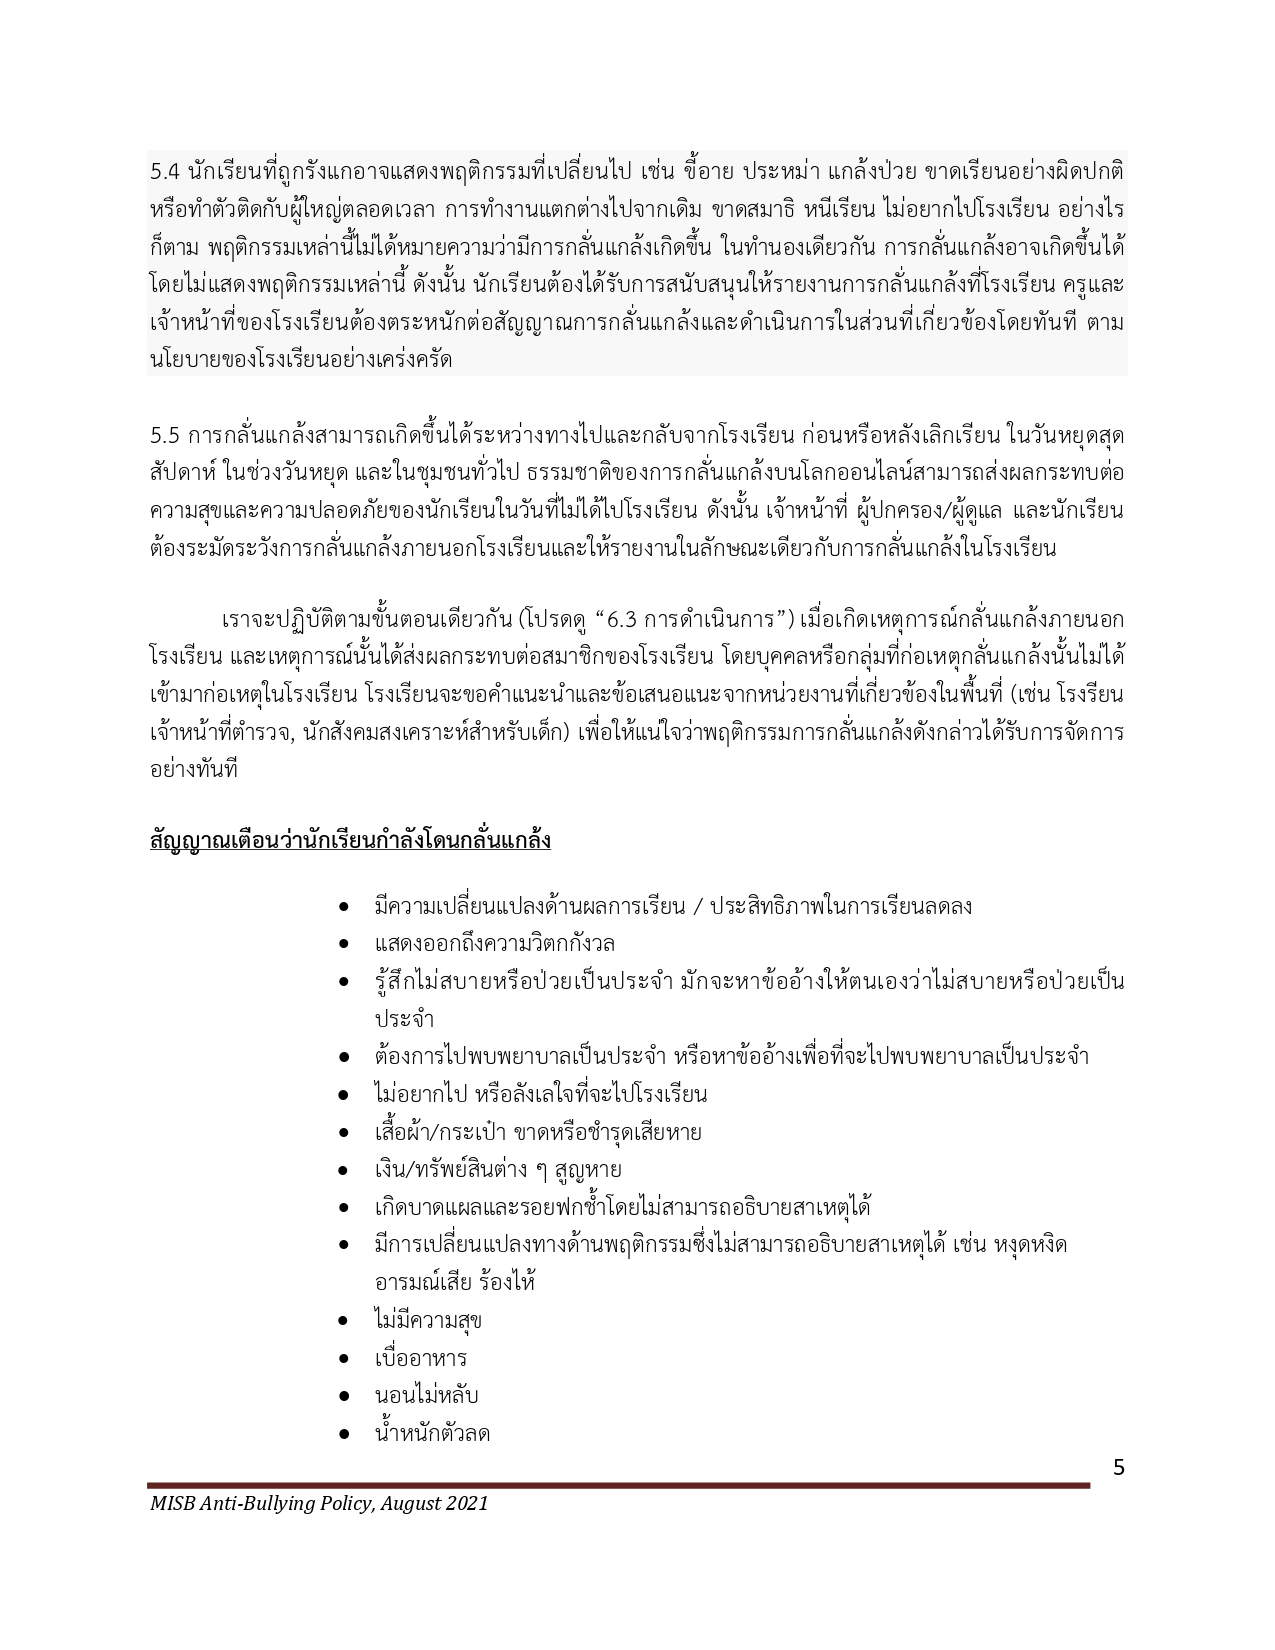 Anti Bullying Policy 2021 2023 Thai Language page 0007